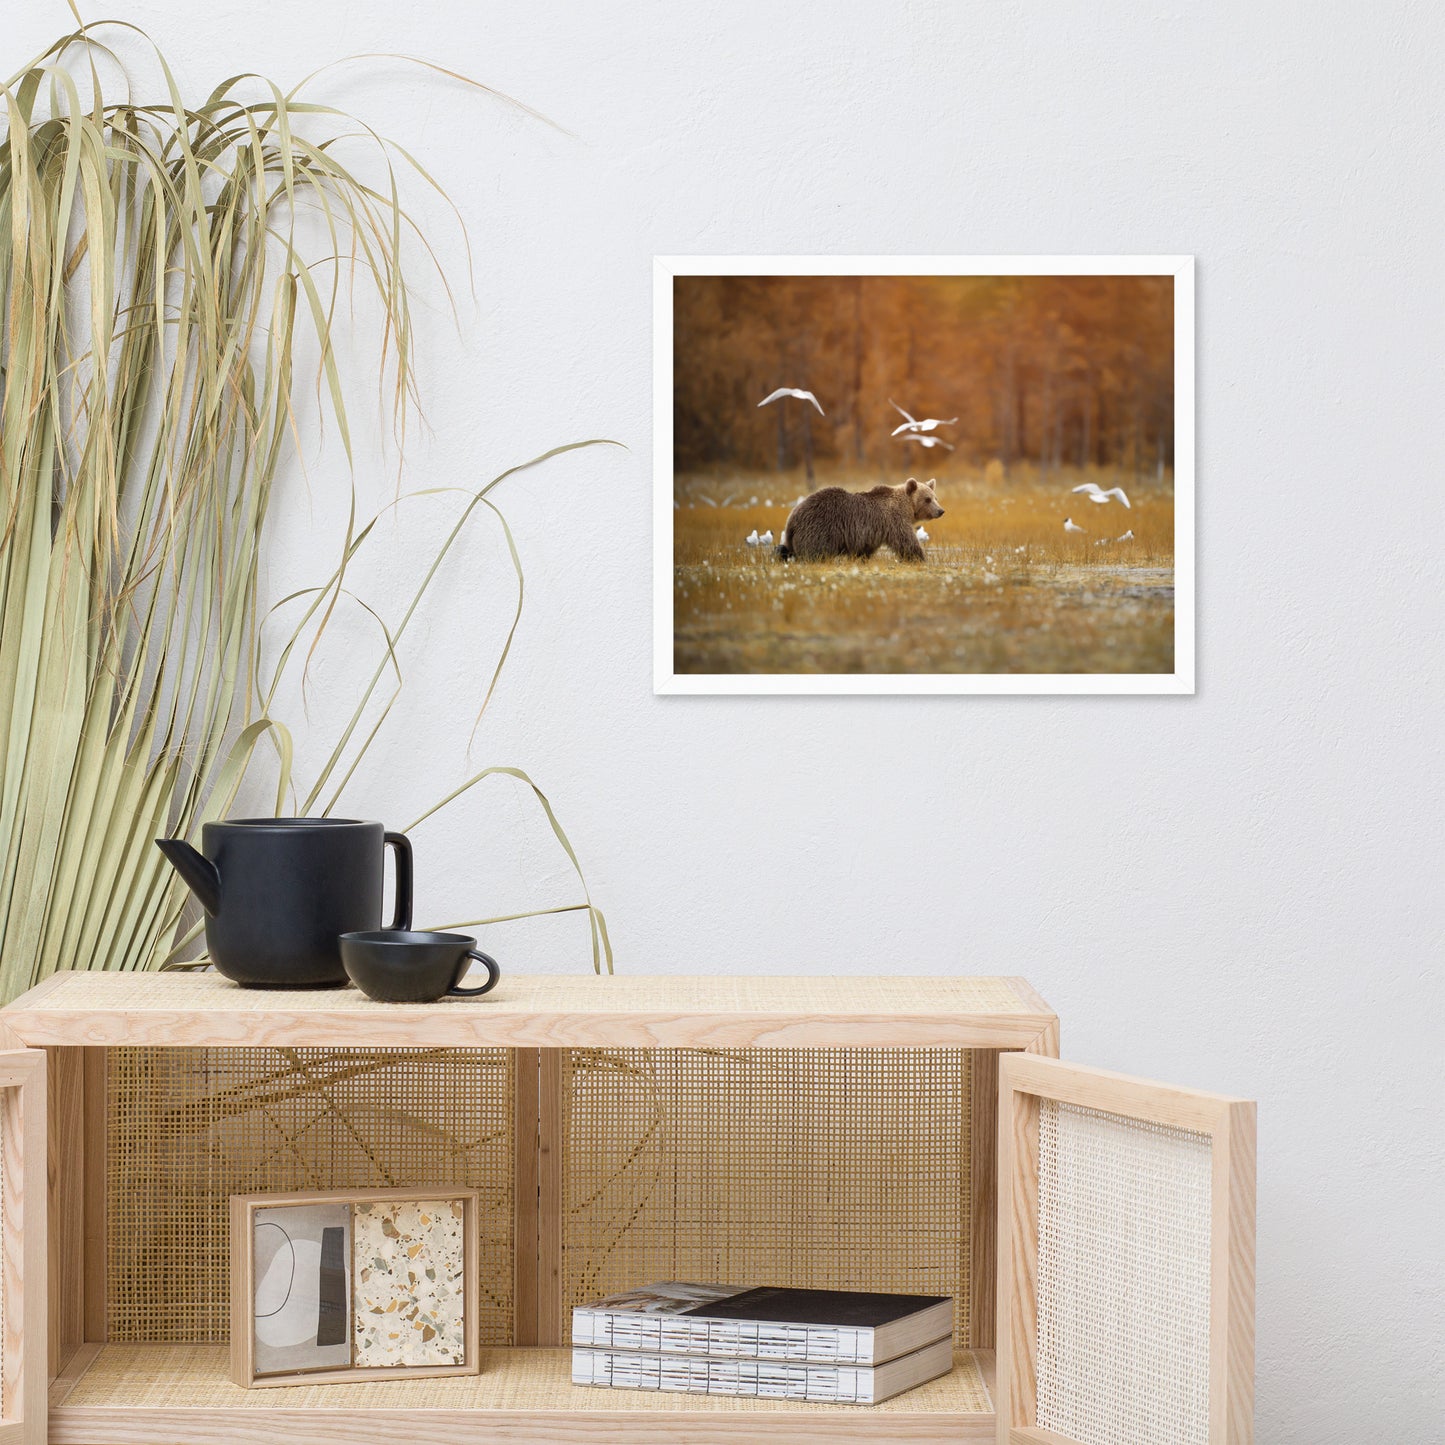 Big Brown Bear Crossing The Marshlands Wildlife Photo Framed Wall Art Prints